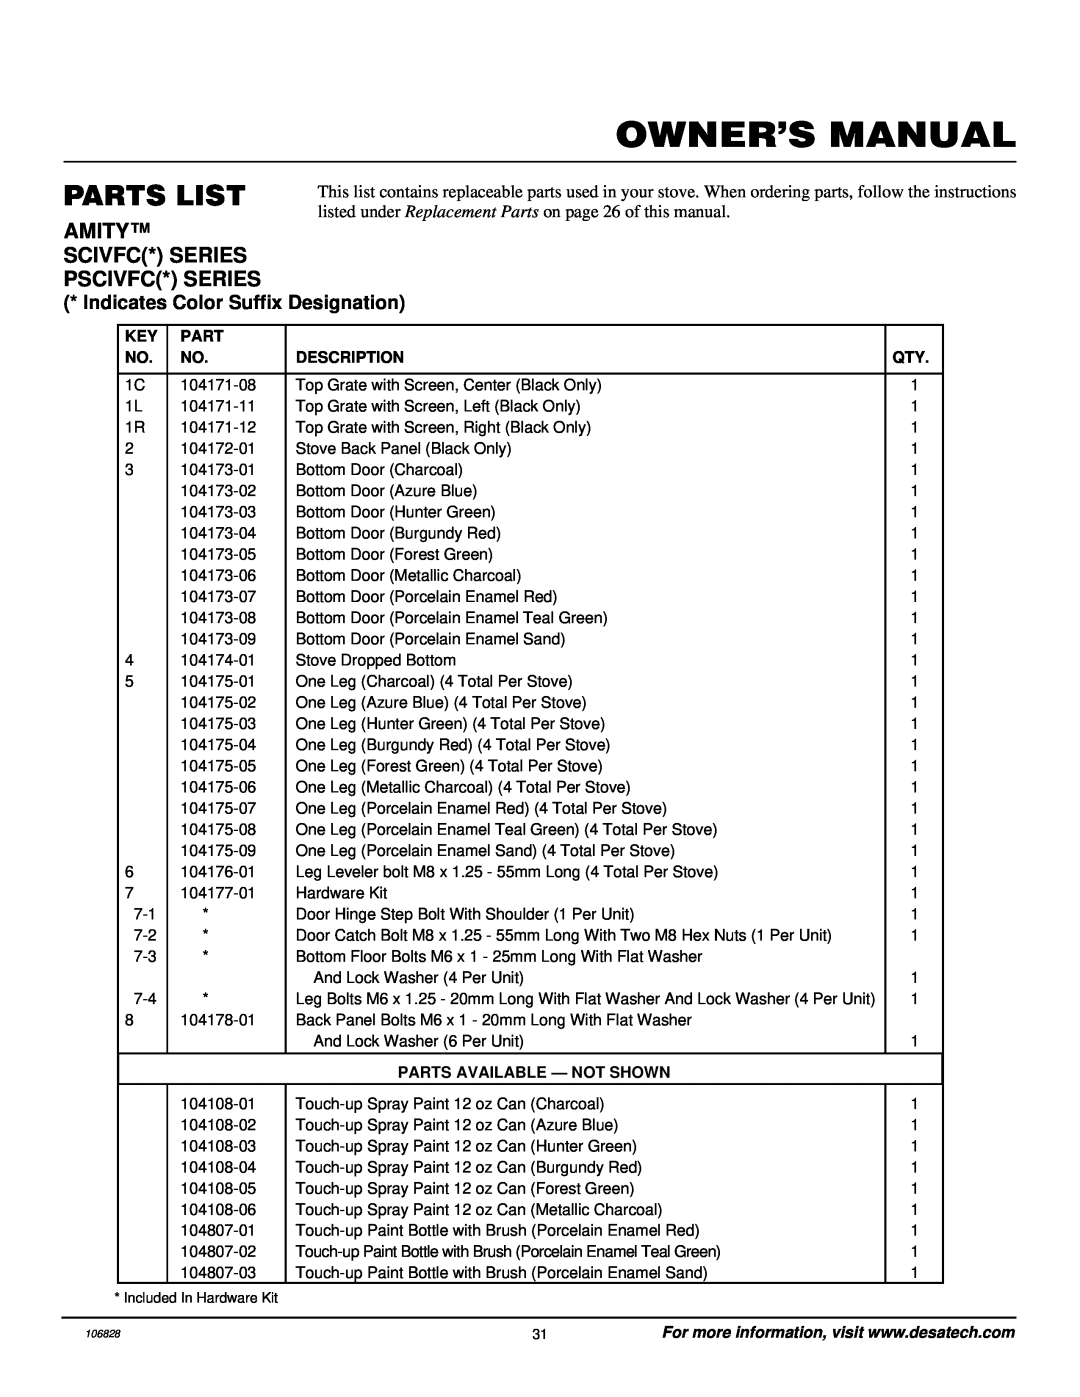 Vanguard Heating SBVBP(C), SBVBN(C) Owner’S Manual, Parts List, Amity Scivfc* Series Pscivfc* Series, Description 